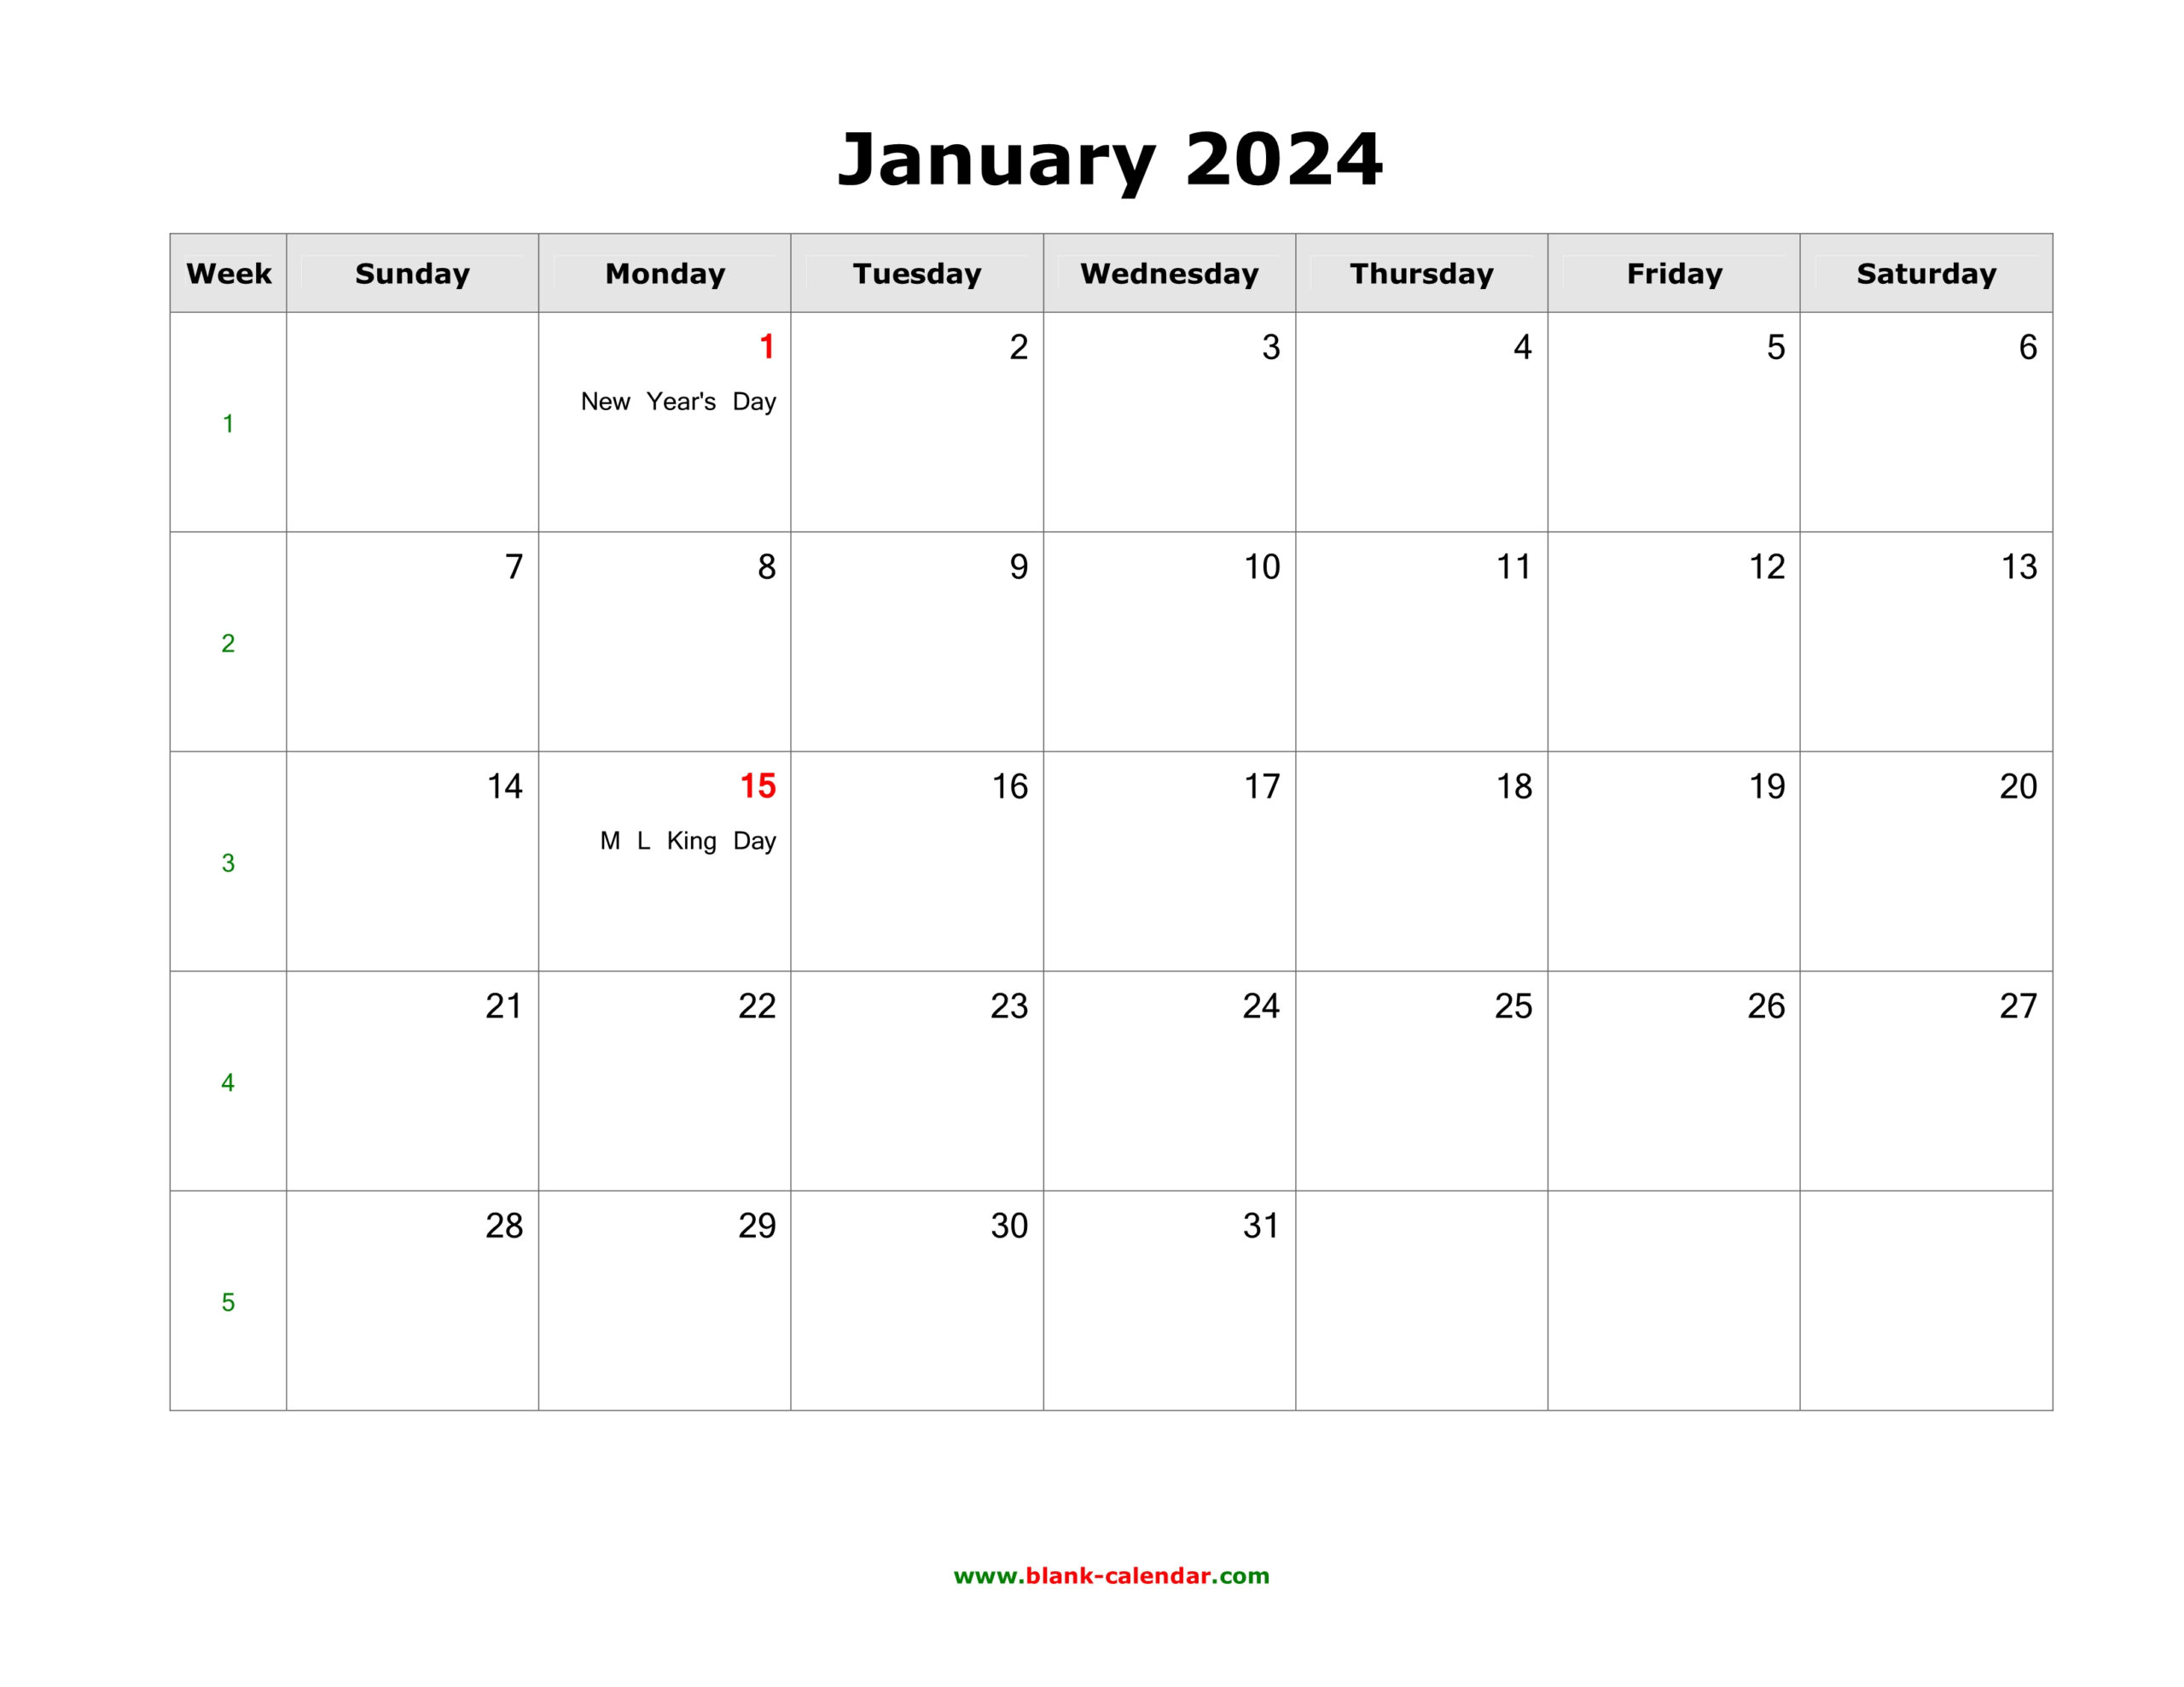 January 2024 Blank Calendar | Free Download Calendar Templates for January 2024 Calendar Printable Word